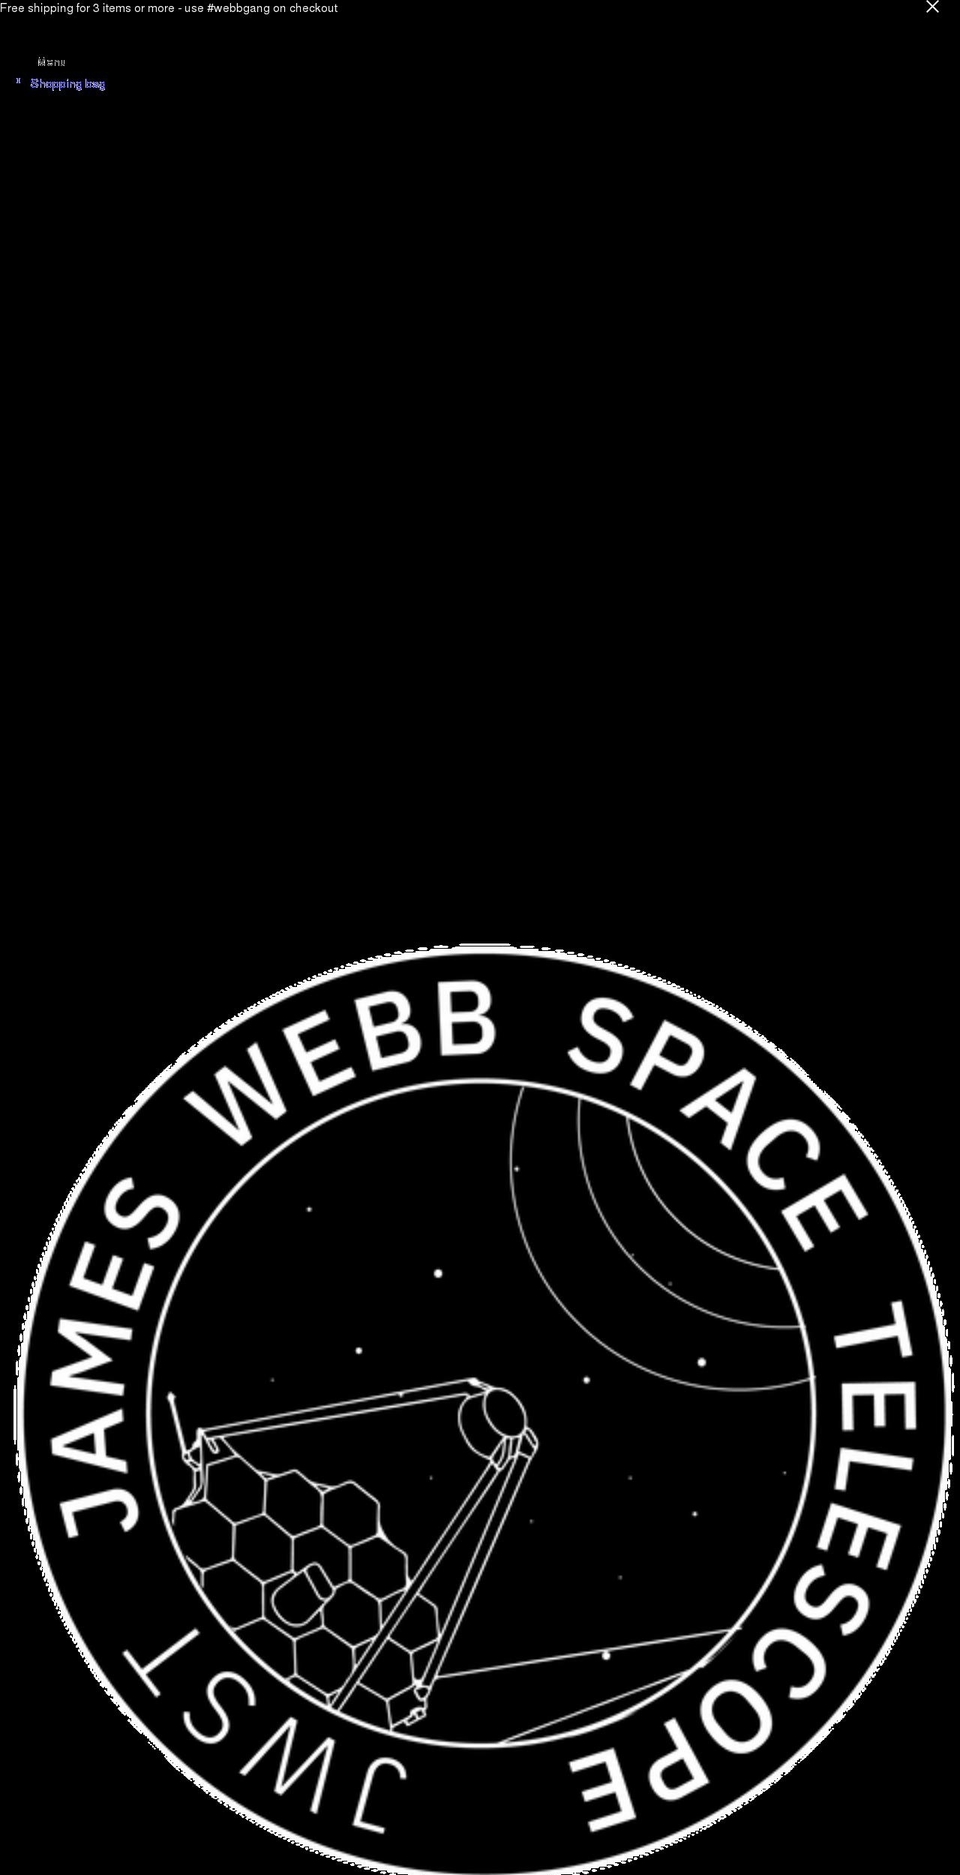 Highlight Shopify theme site example james-webb-space-telescope.com